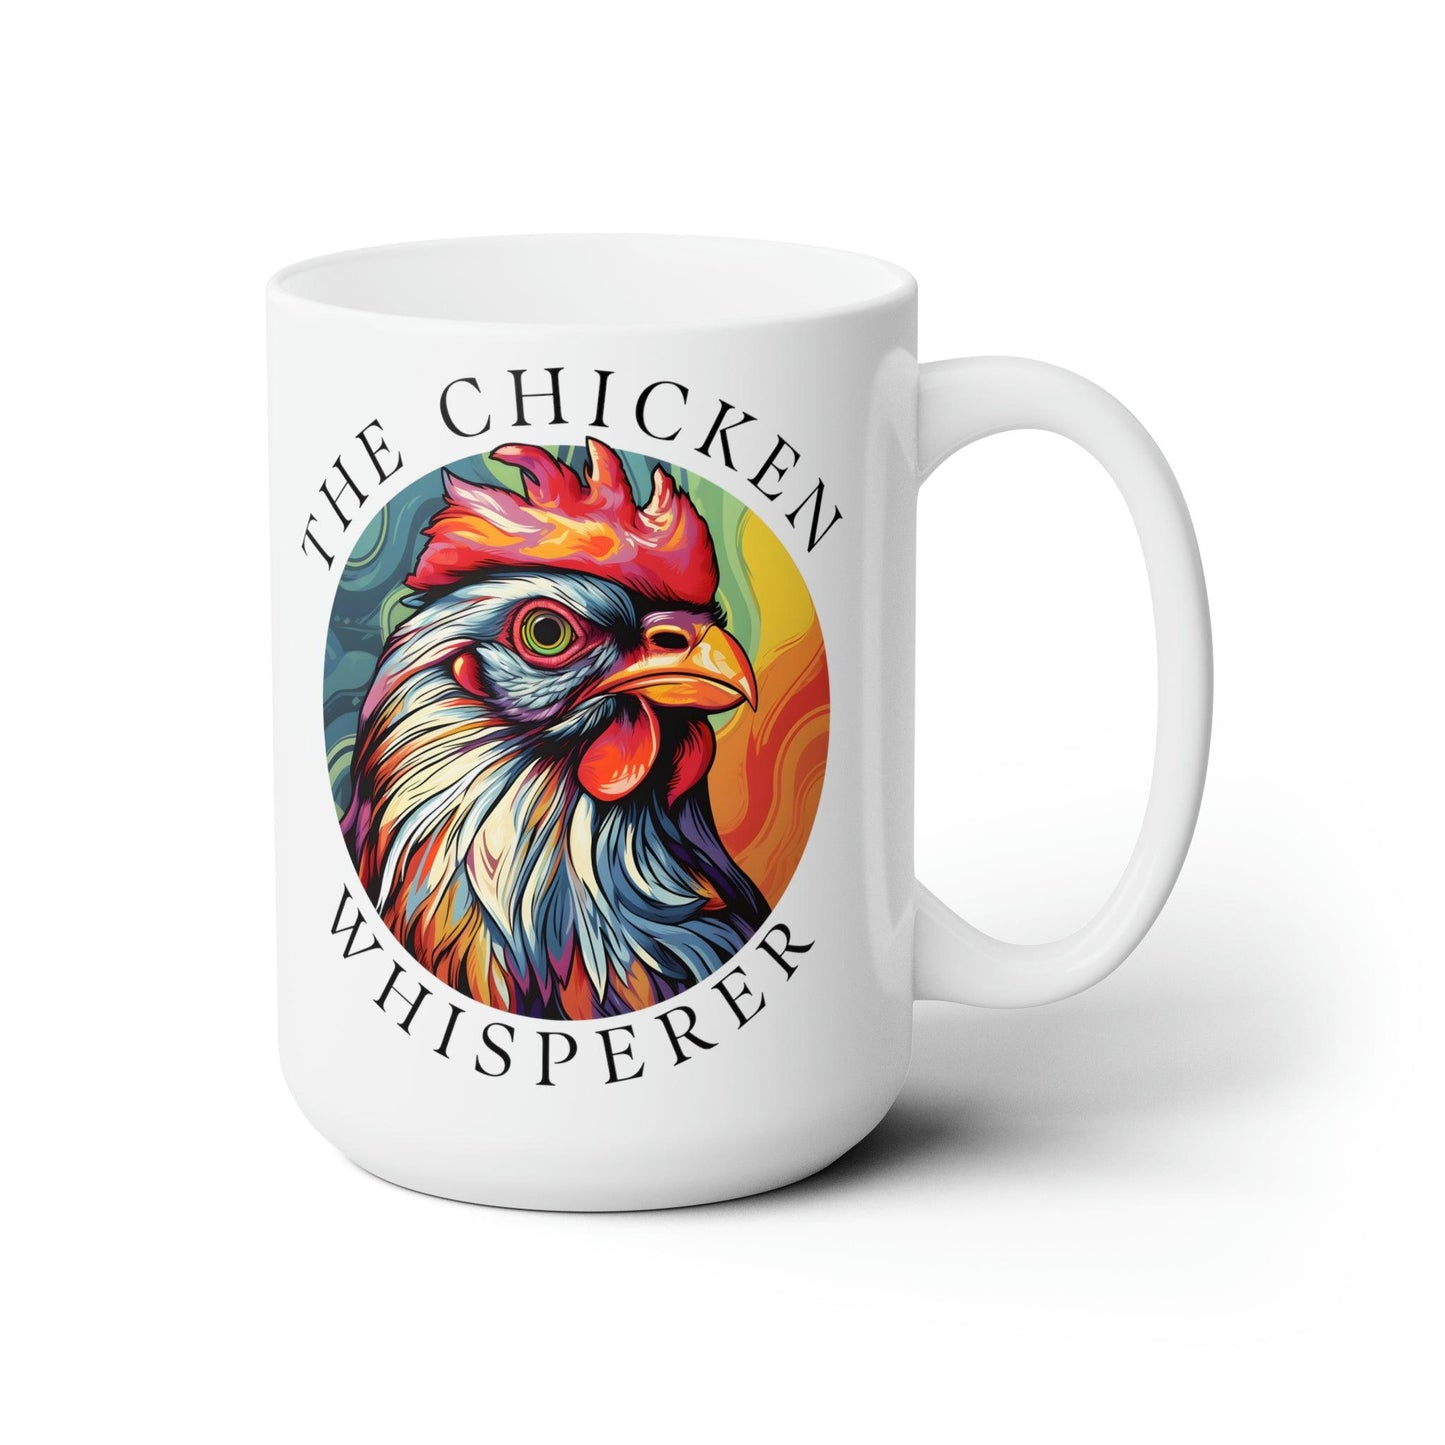 Chicken Whisperer Mug Chicken Coffee Mug Chicken lovers Mug Chicken Lover Gift for her Funny Chicken Cup Roster Mug Retro Vintage coffee Mug